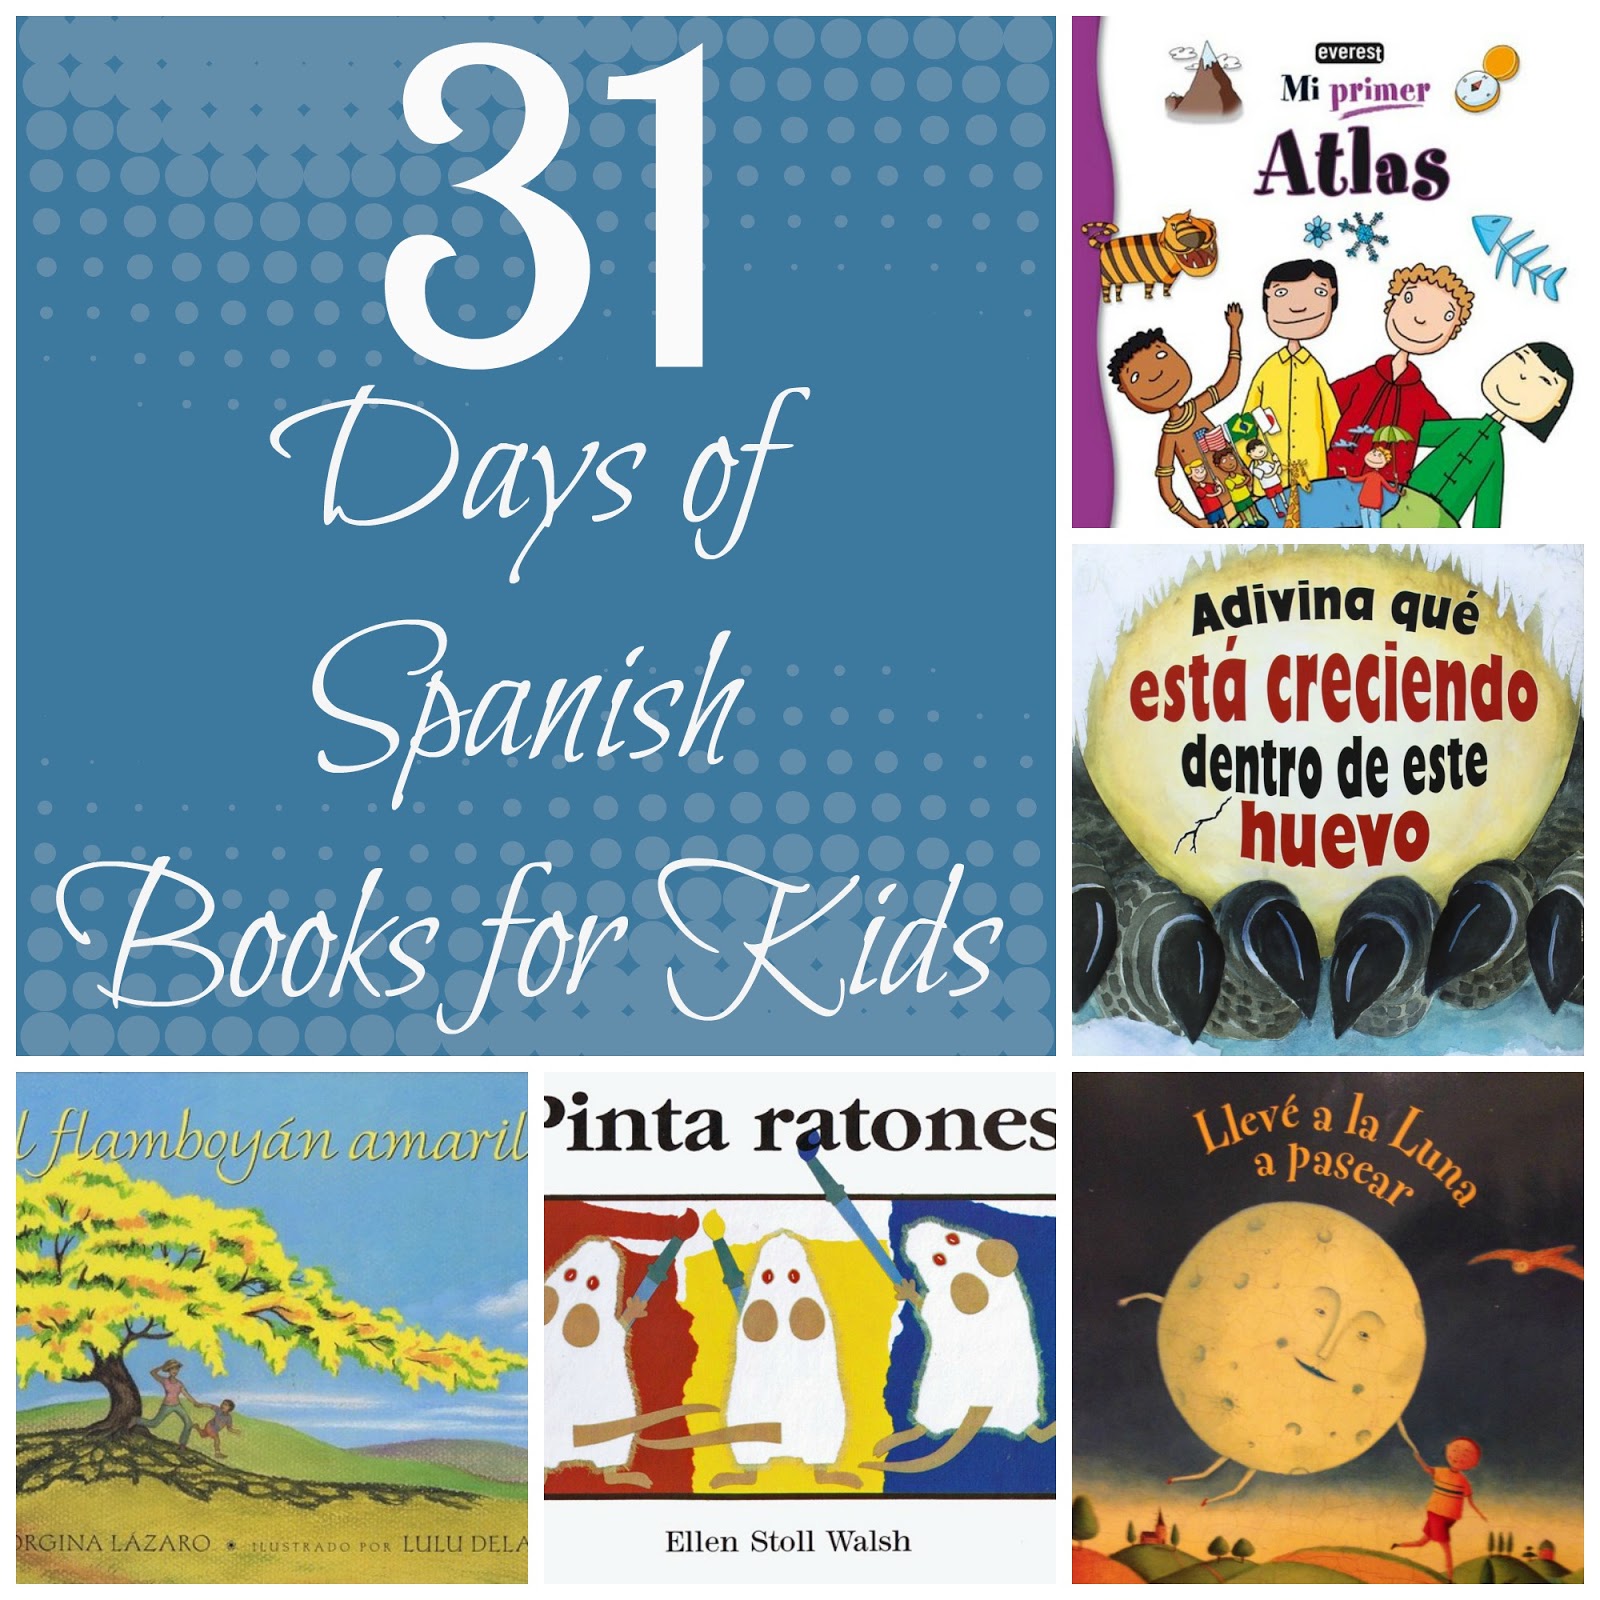 Debbie's Spanish Learning 31 Days of Spanish Books for Kids